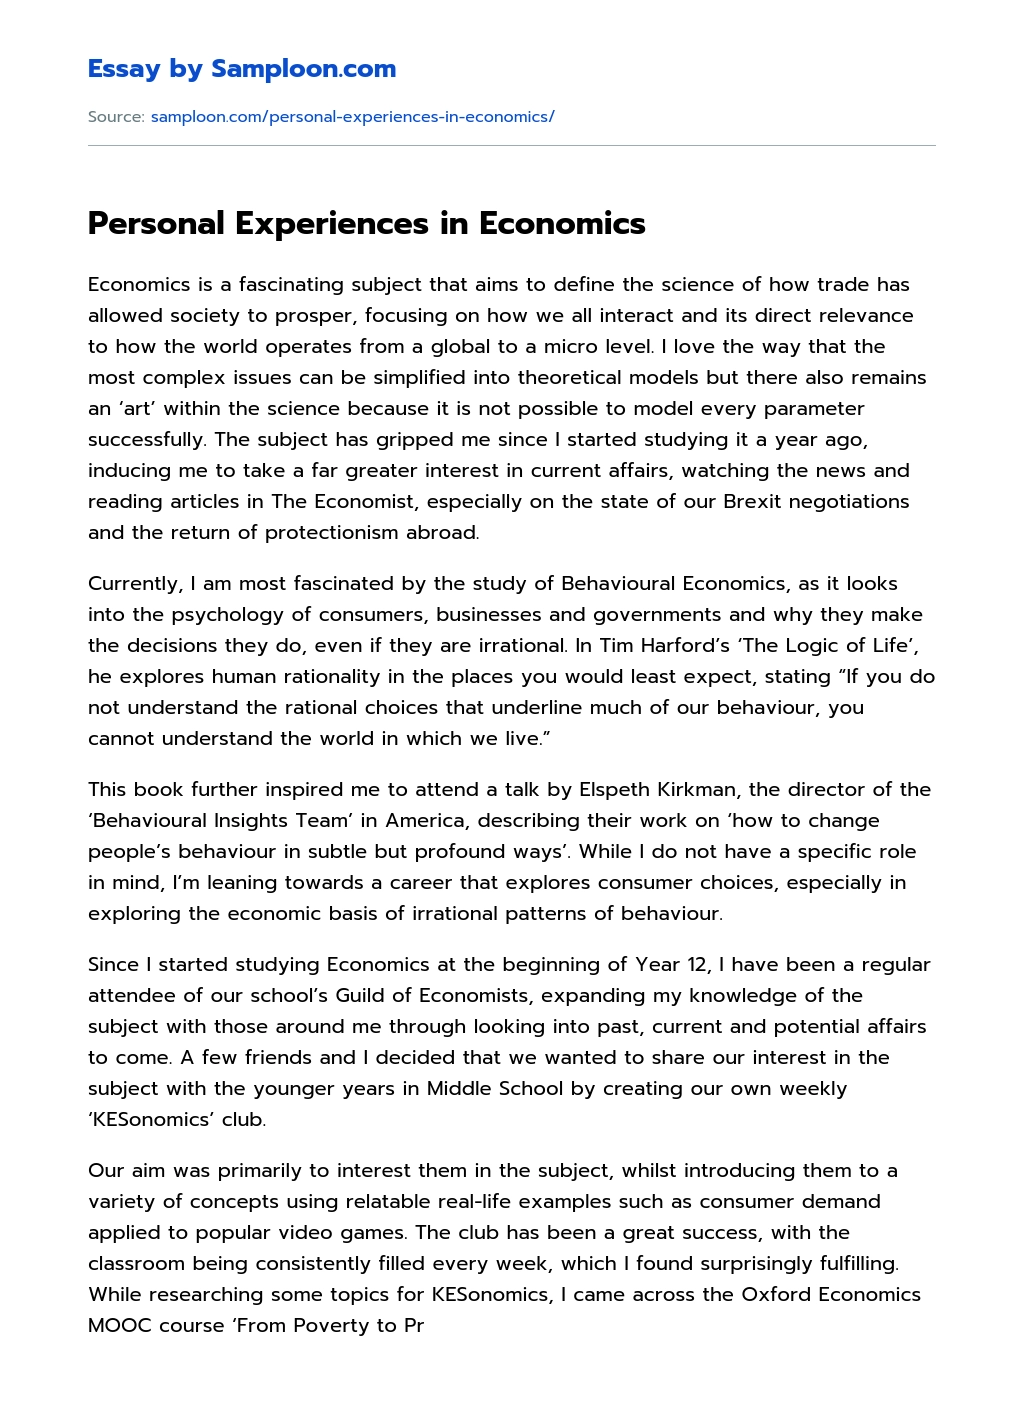 Personal Experiences in Economics essay